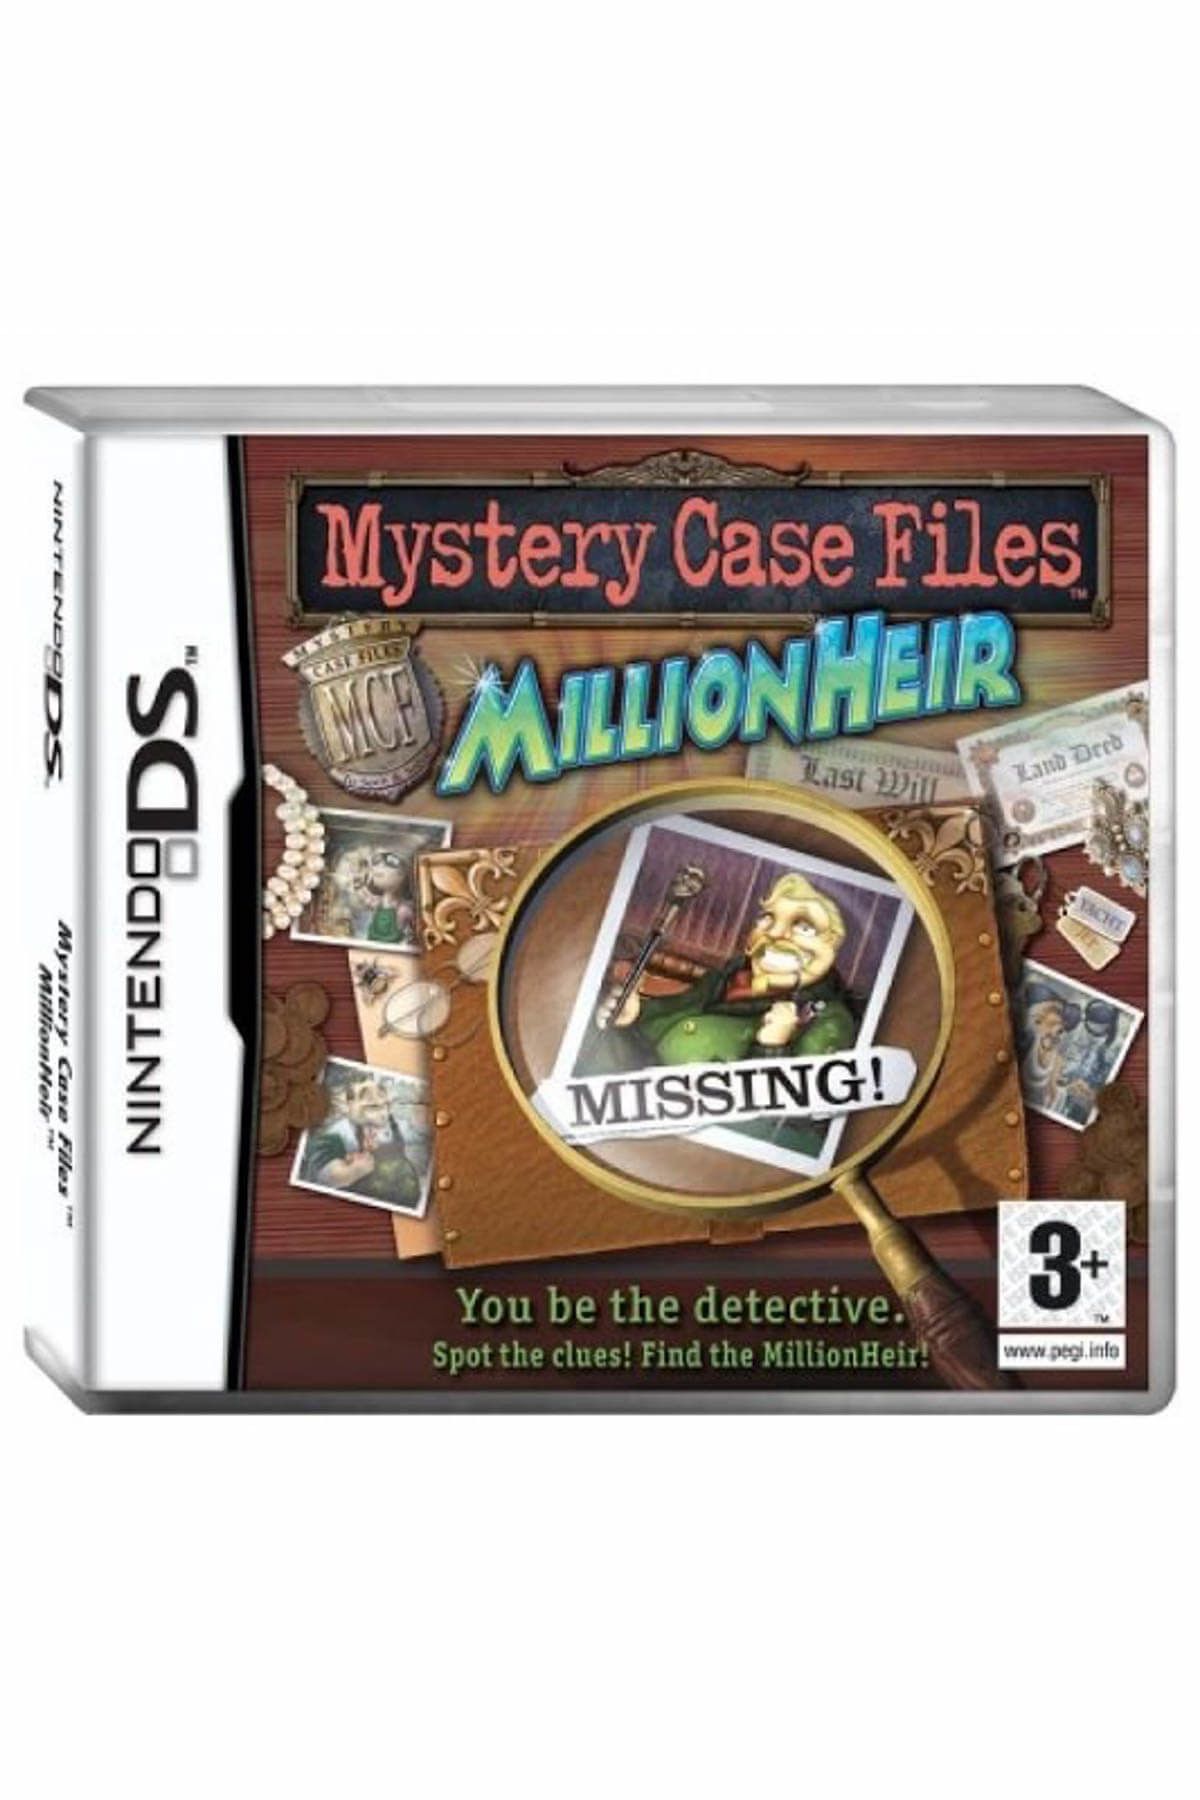 Nintendo Ds Mystery Case Files Millionheir